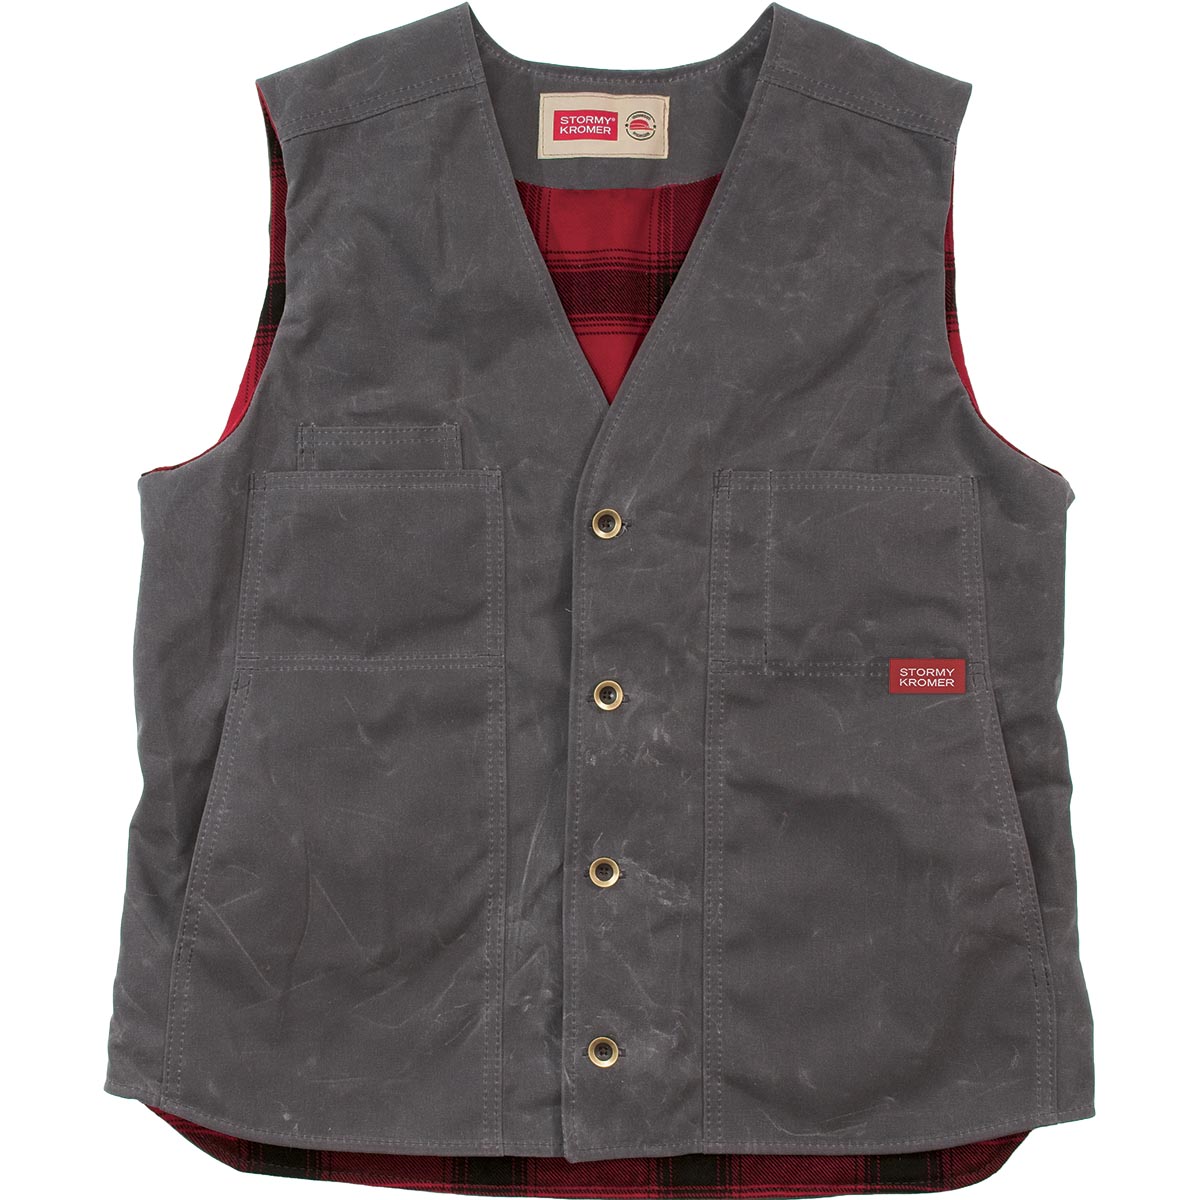 Stormy Kromer Men's Waxed Button Vest